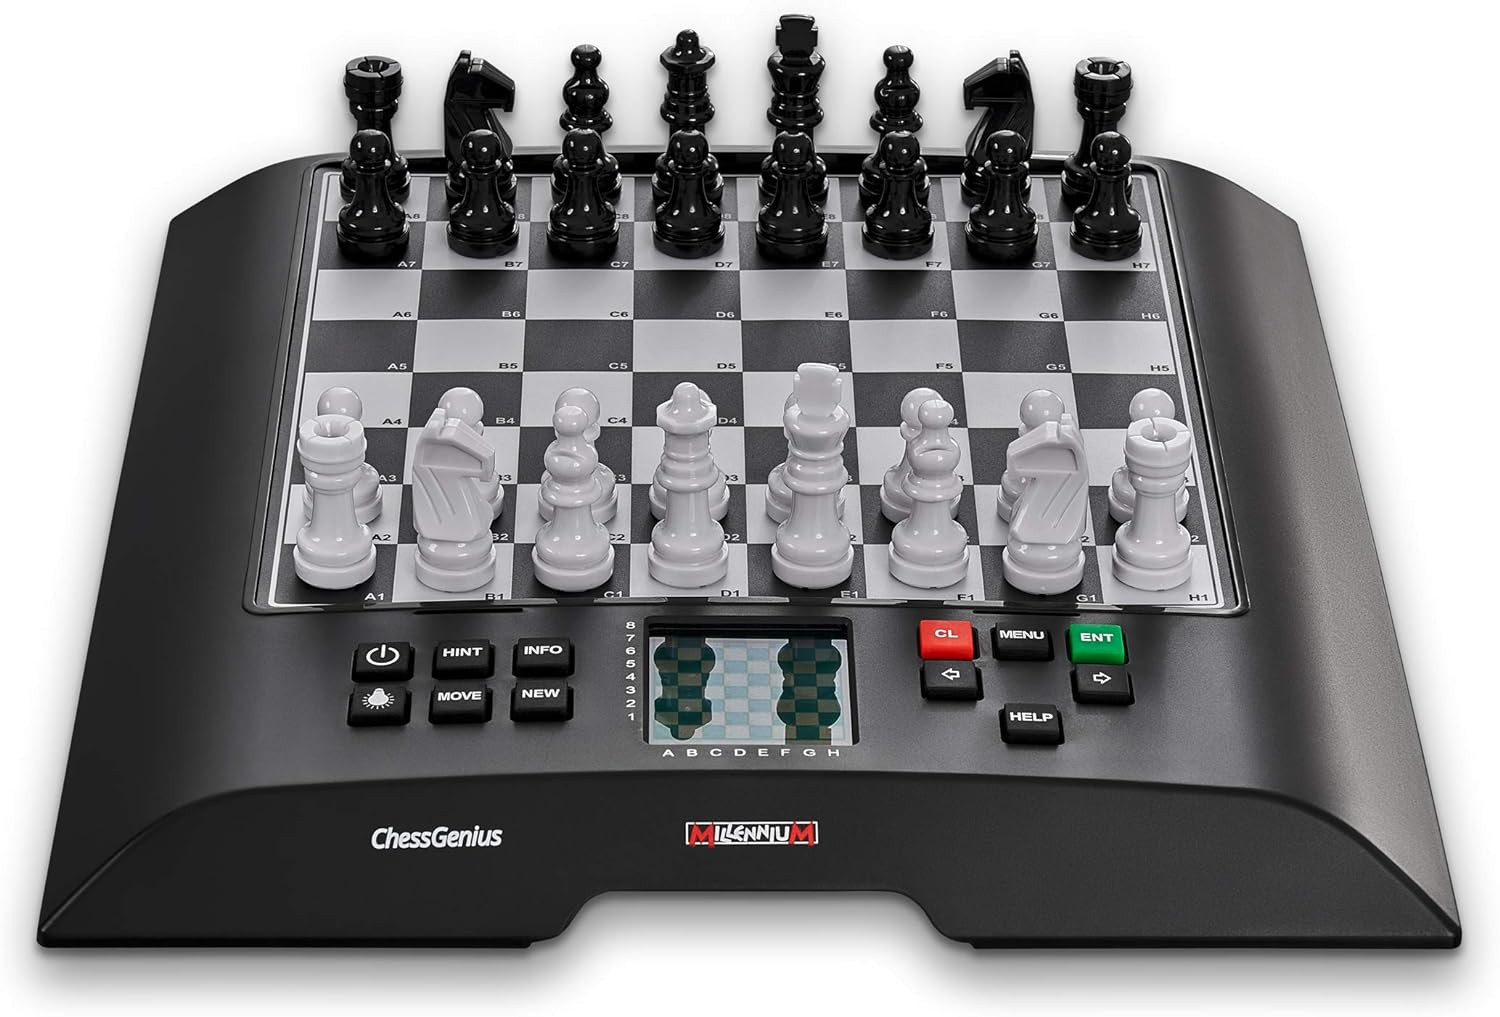 633b609fb7b161773614e2ce-chess-genius-electronic-chess-board-by